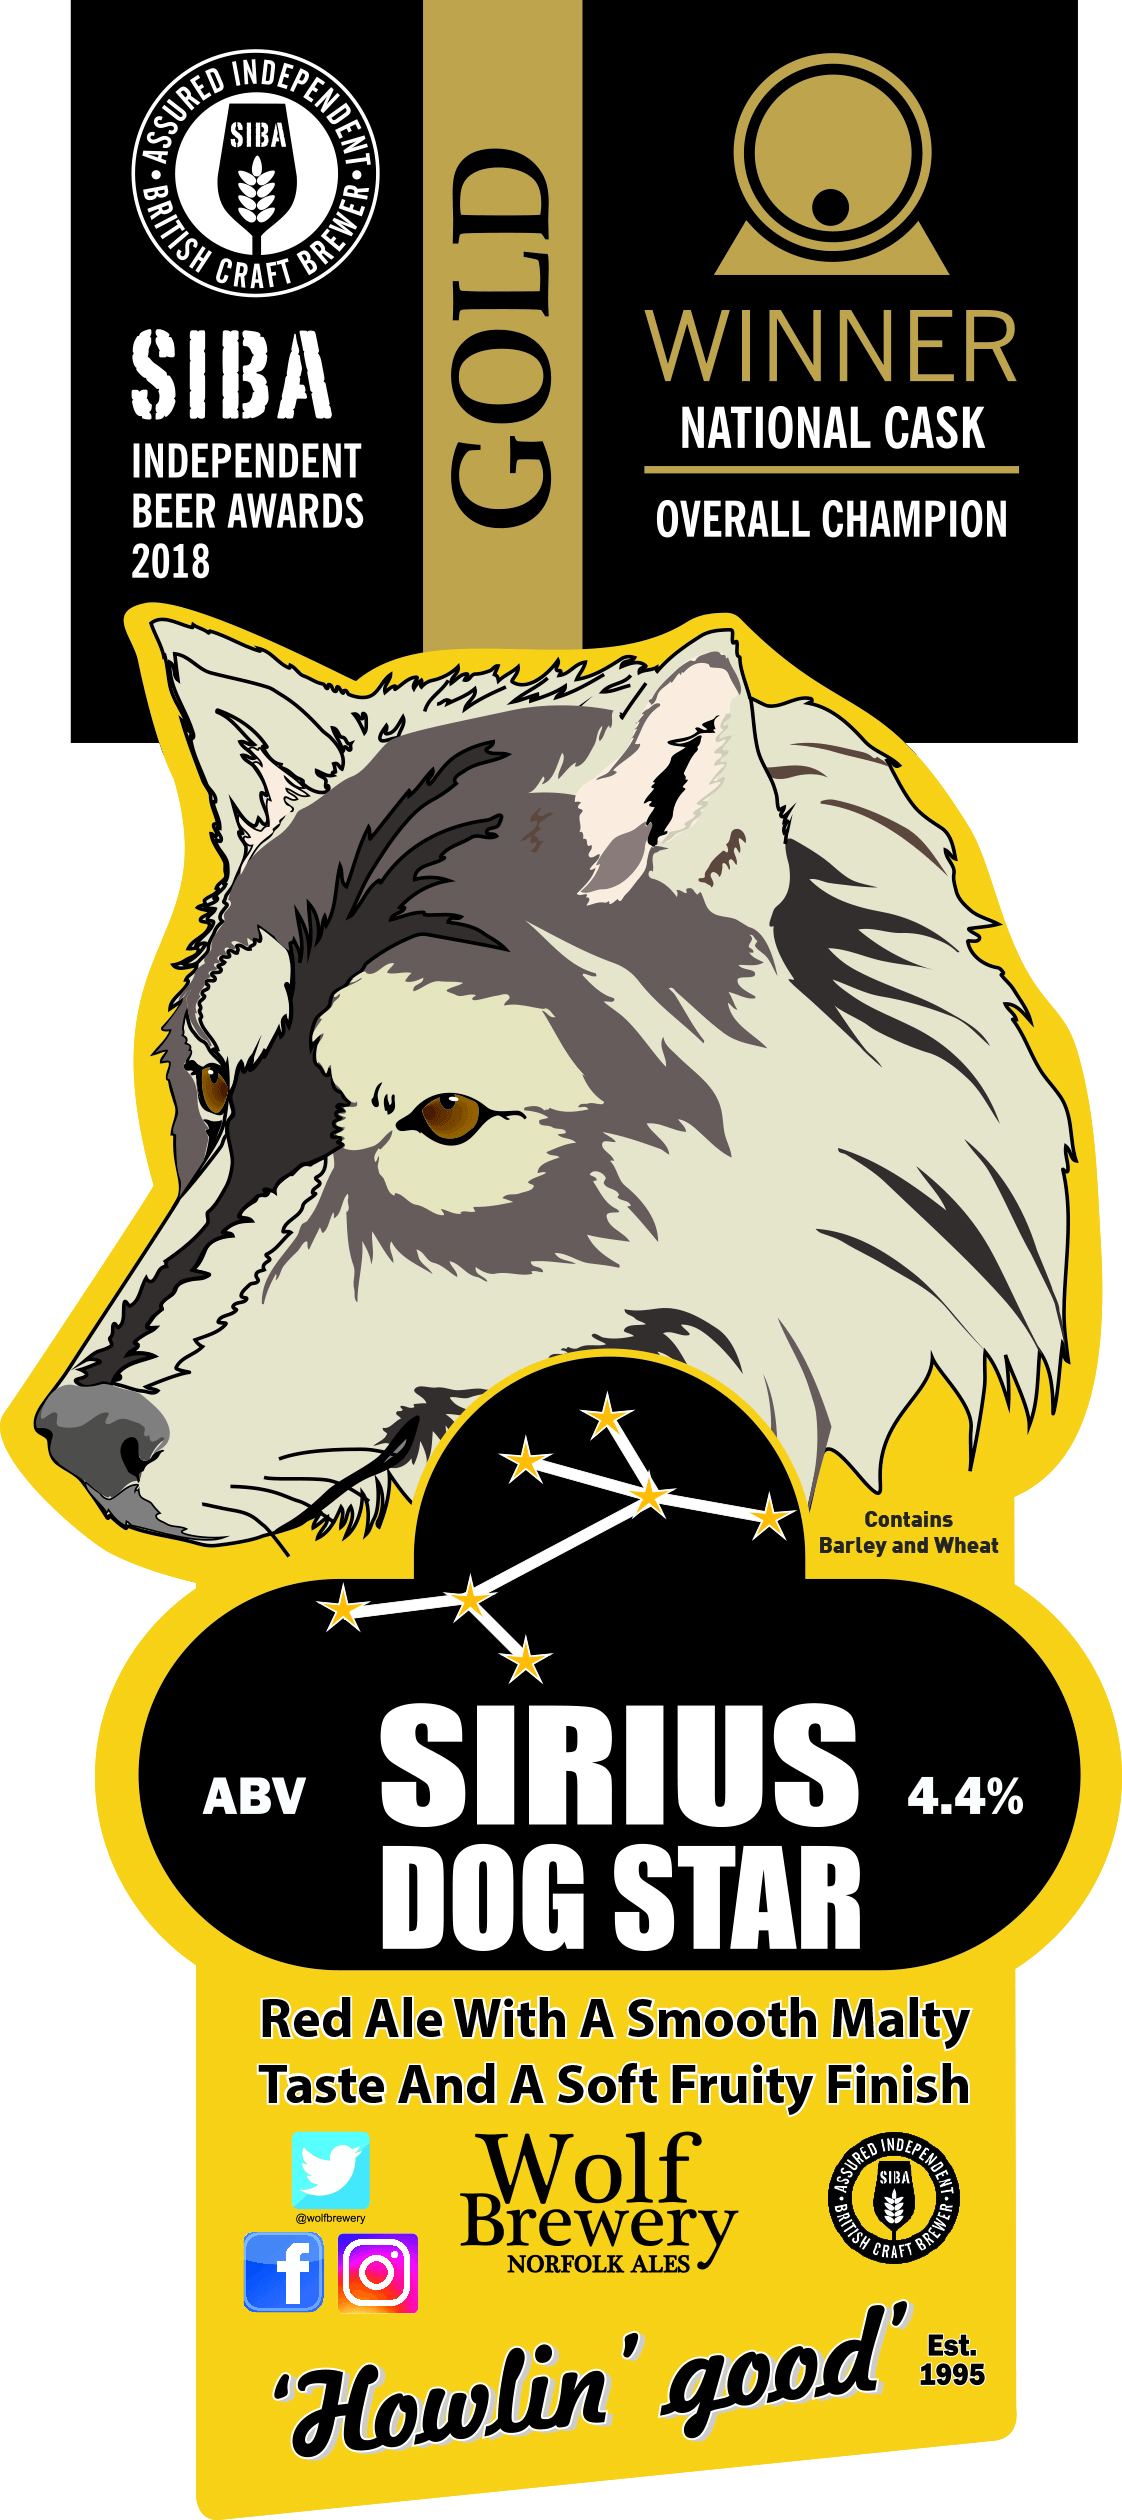 Sirius Dog Star beer